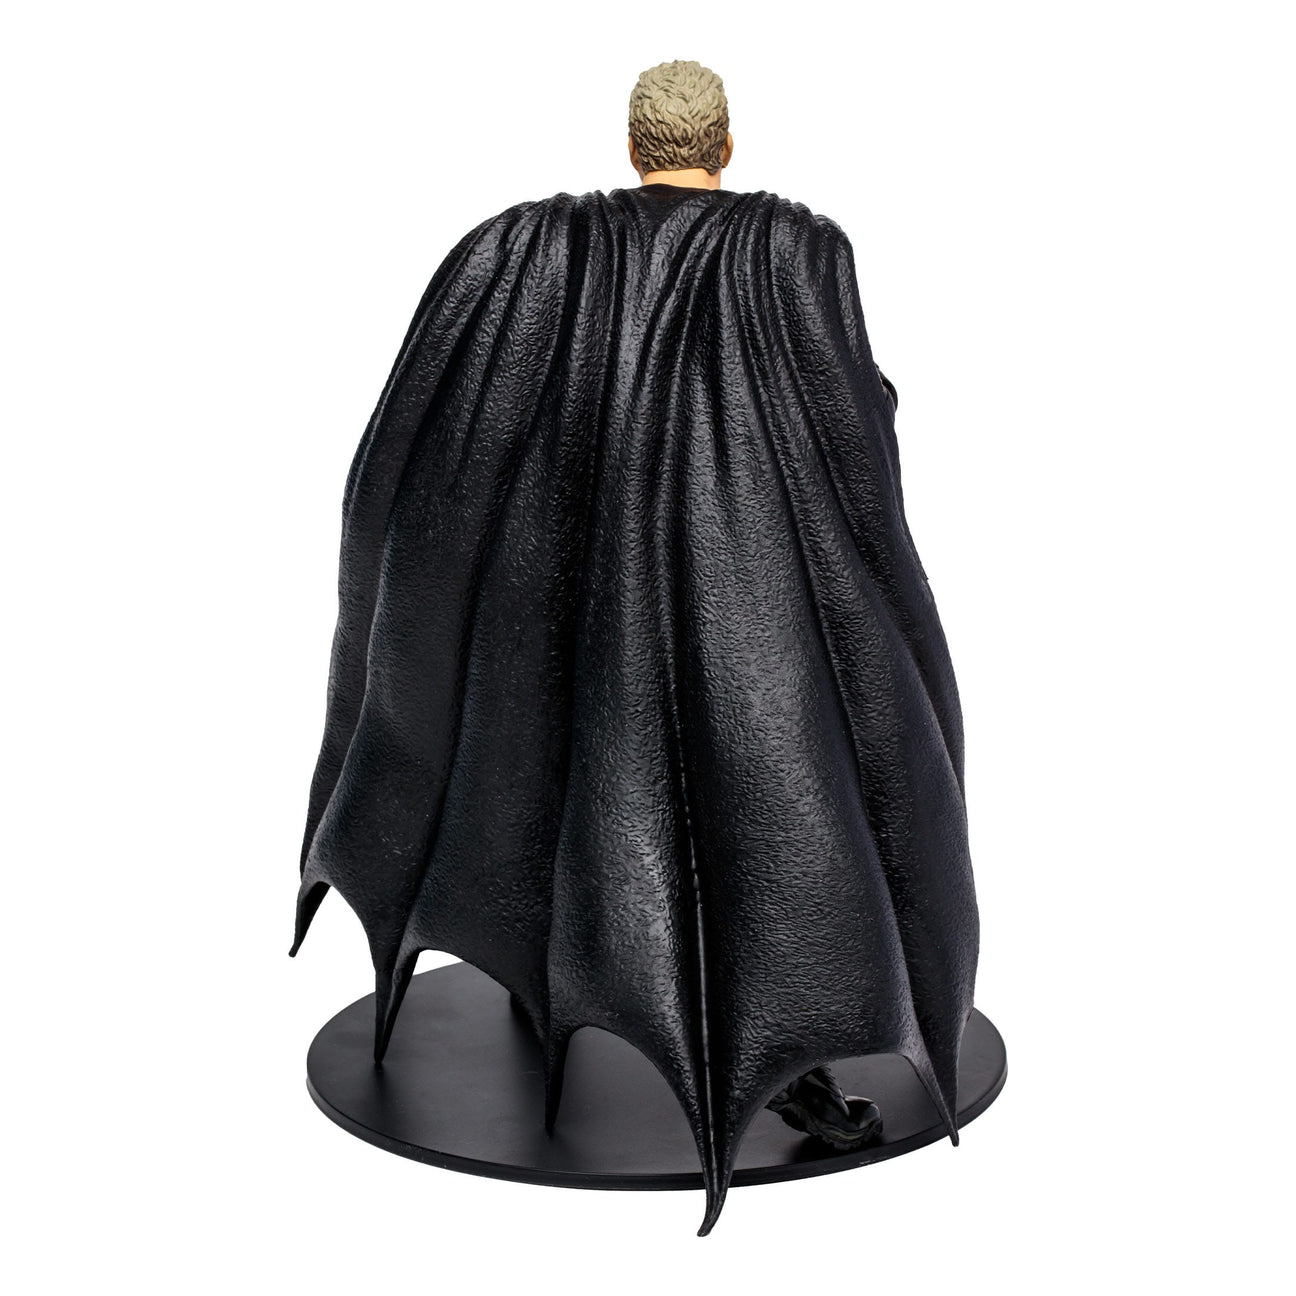 DC Multiverse: Batman (Unmasked, The Flash) - 30 cm Statue-Statue-McFarlane Toys-Mighty Underground